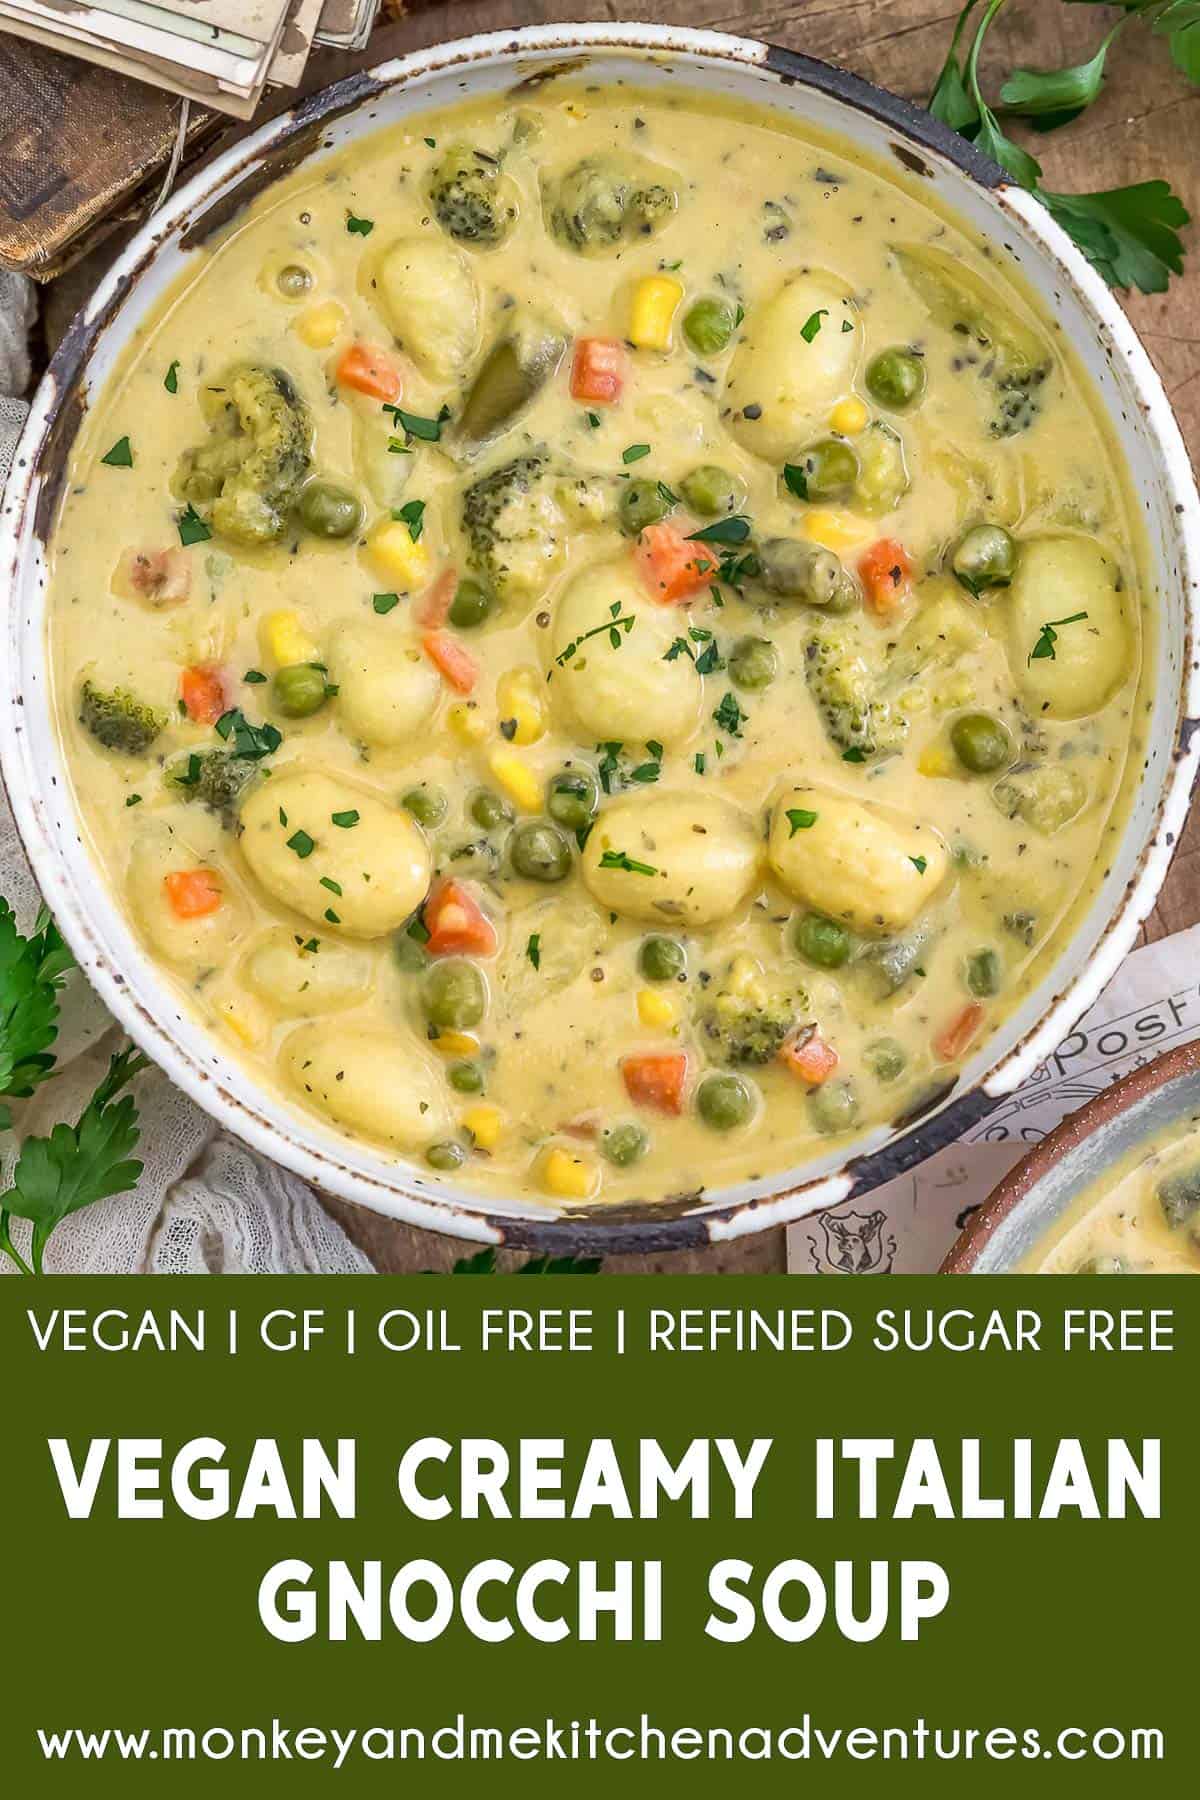 Vegan Creamy Italian Gnocchi Soup with text description